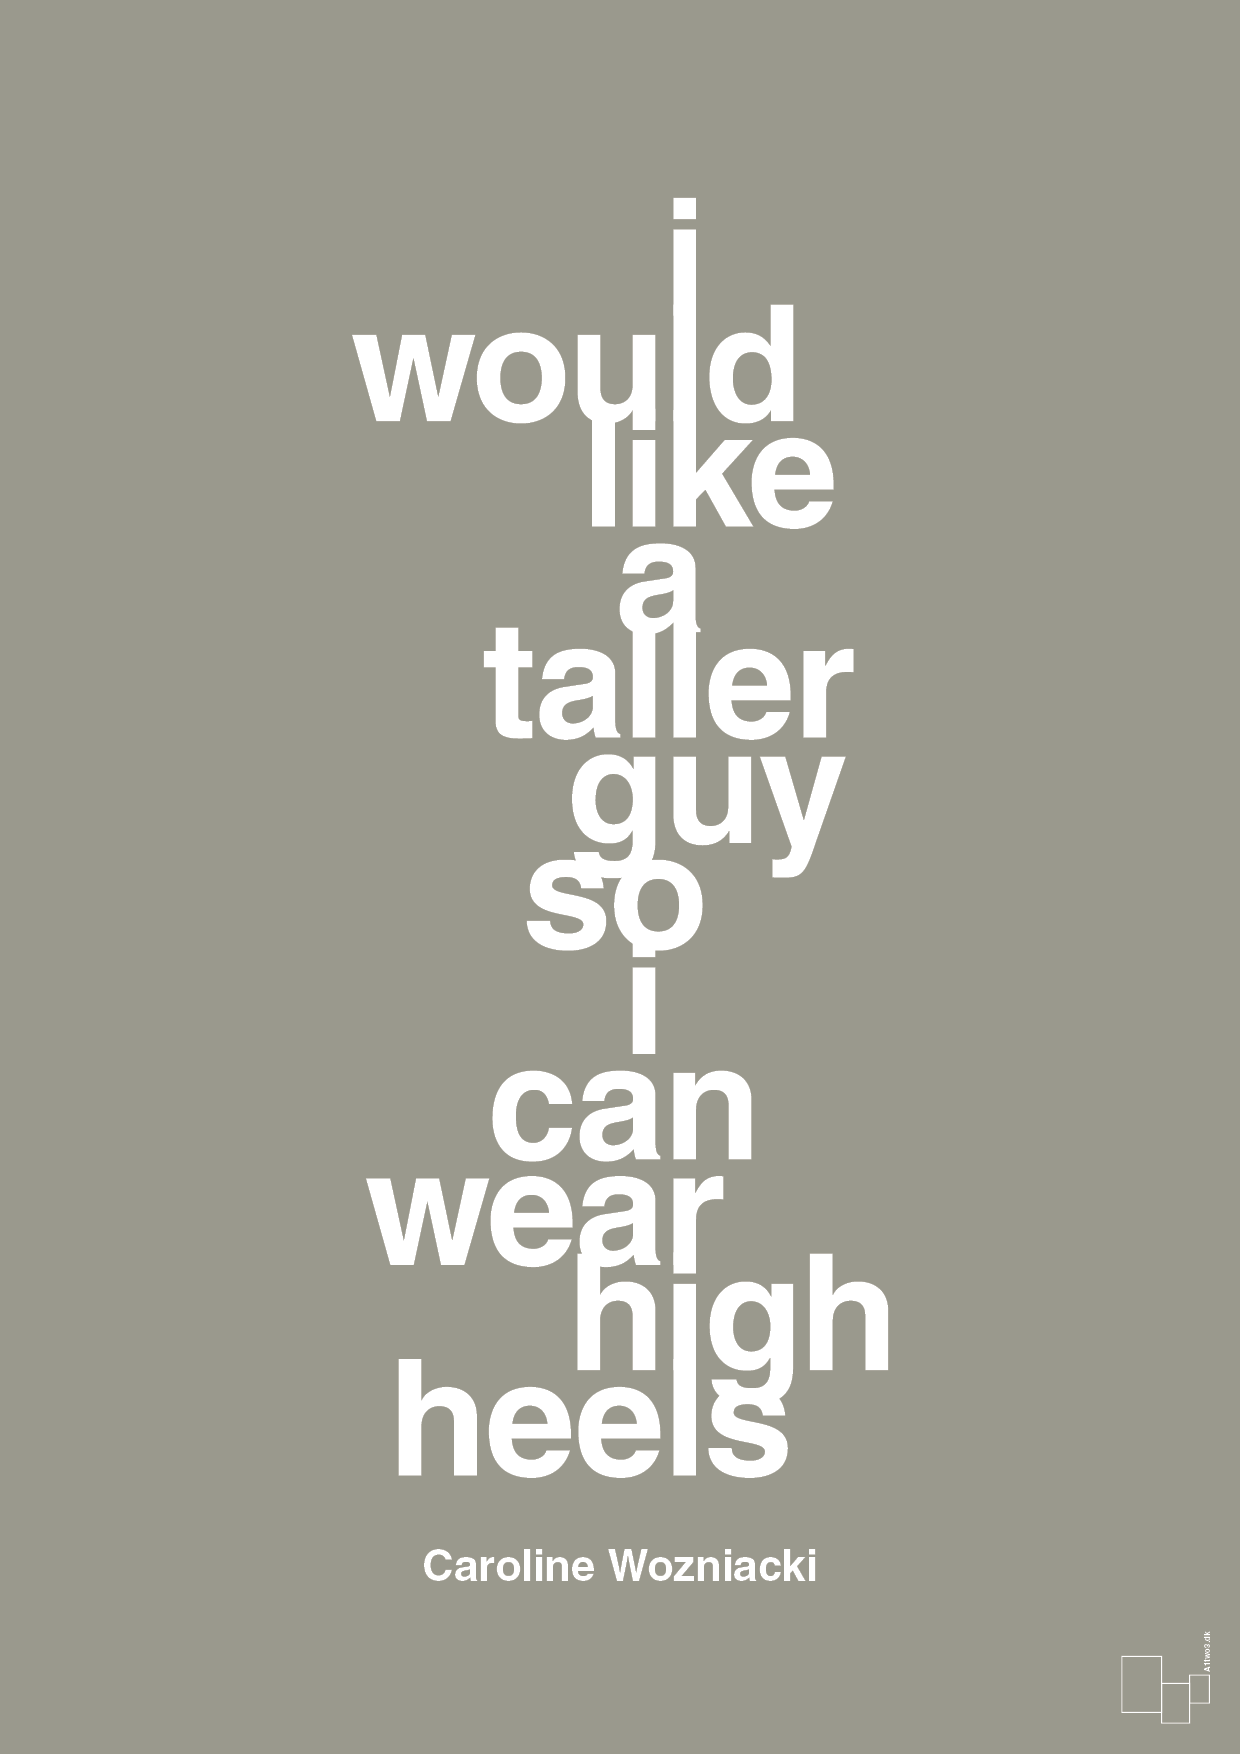 i would like a taller guy so i can wear high heels - Plakat med Citater i Battleship Gray